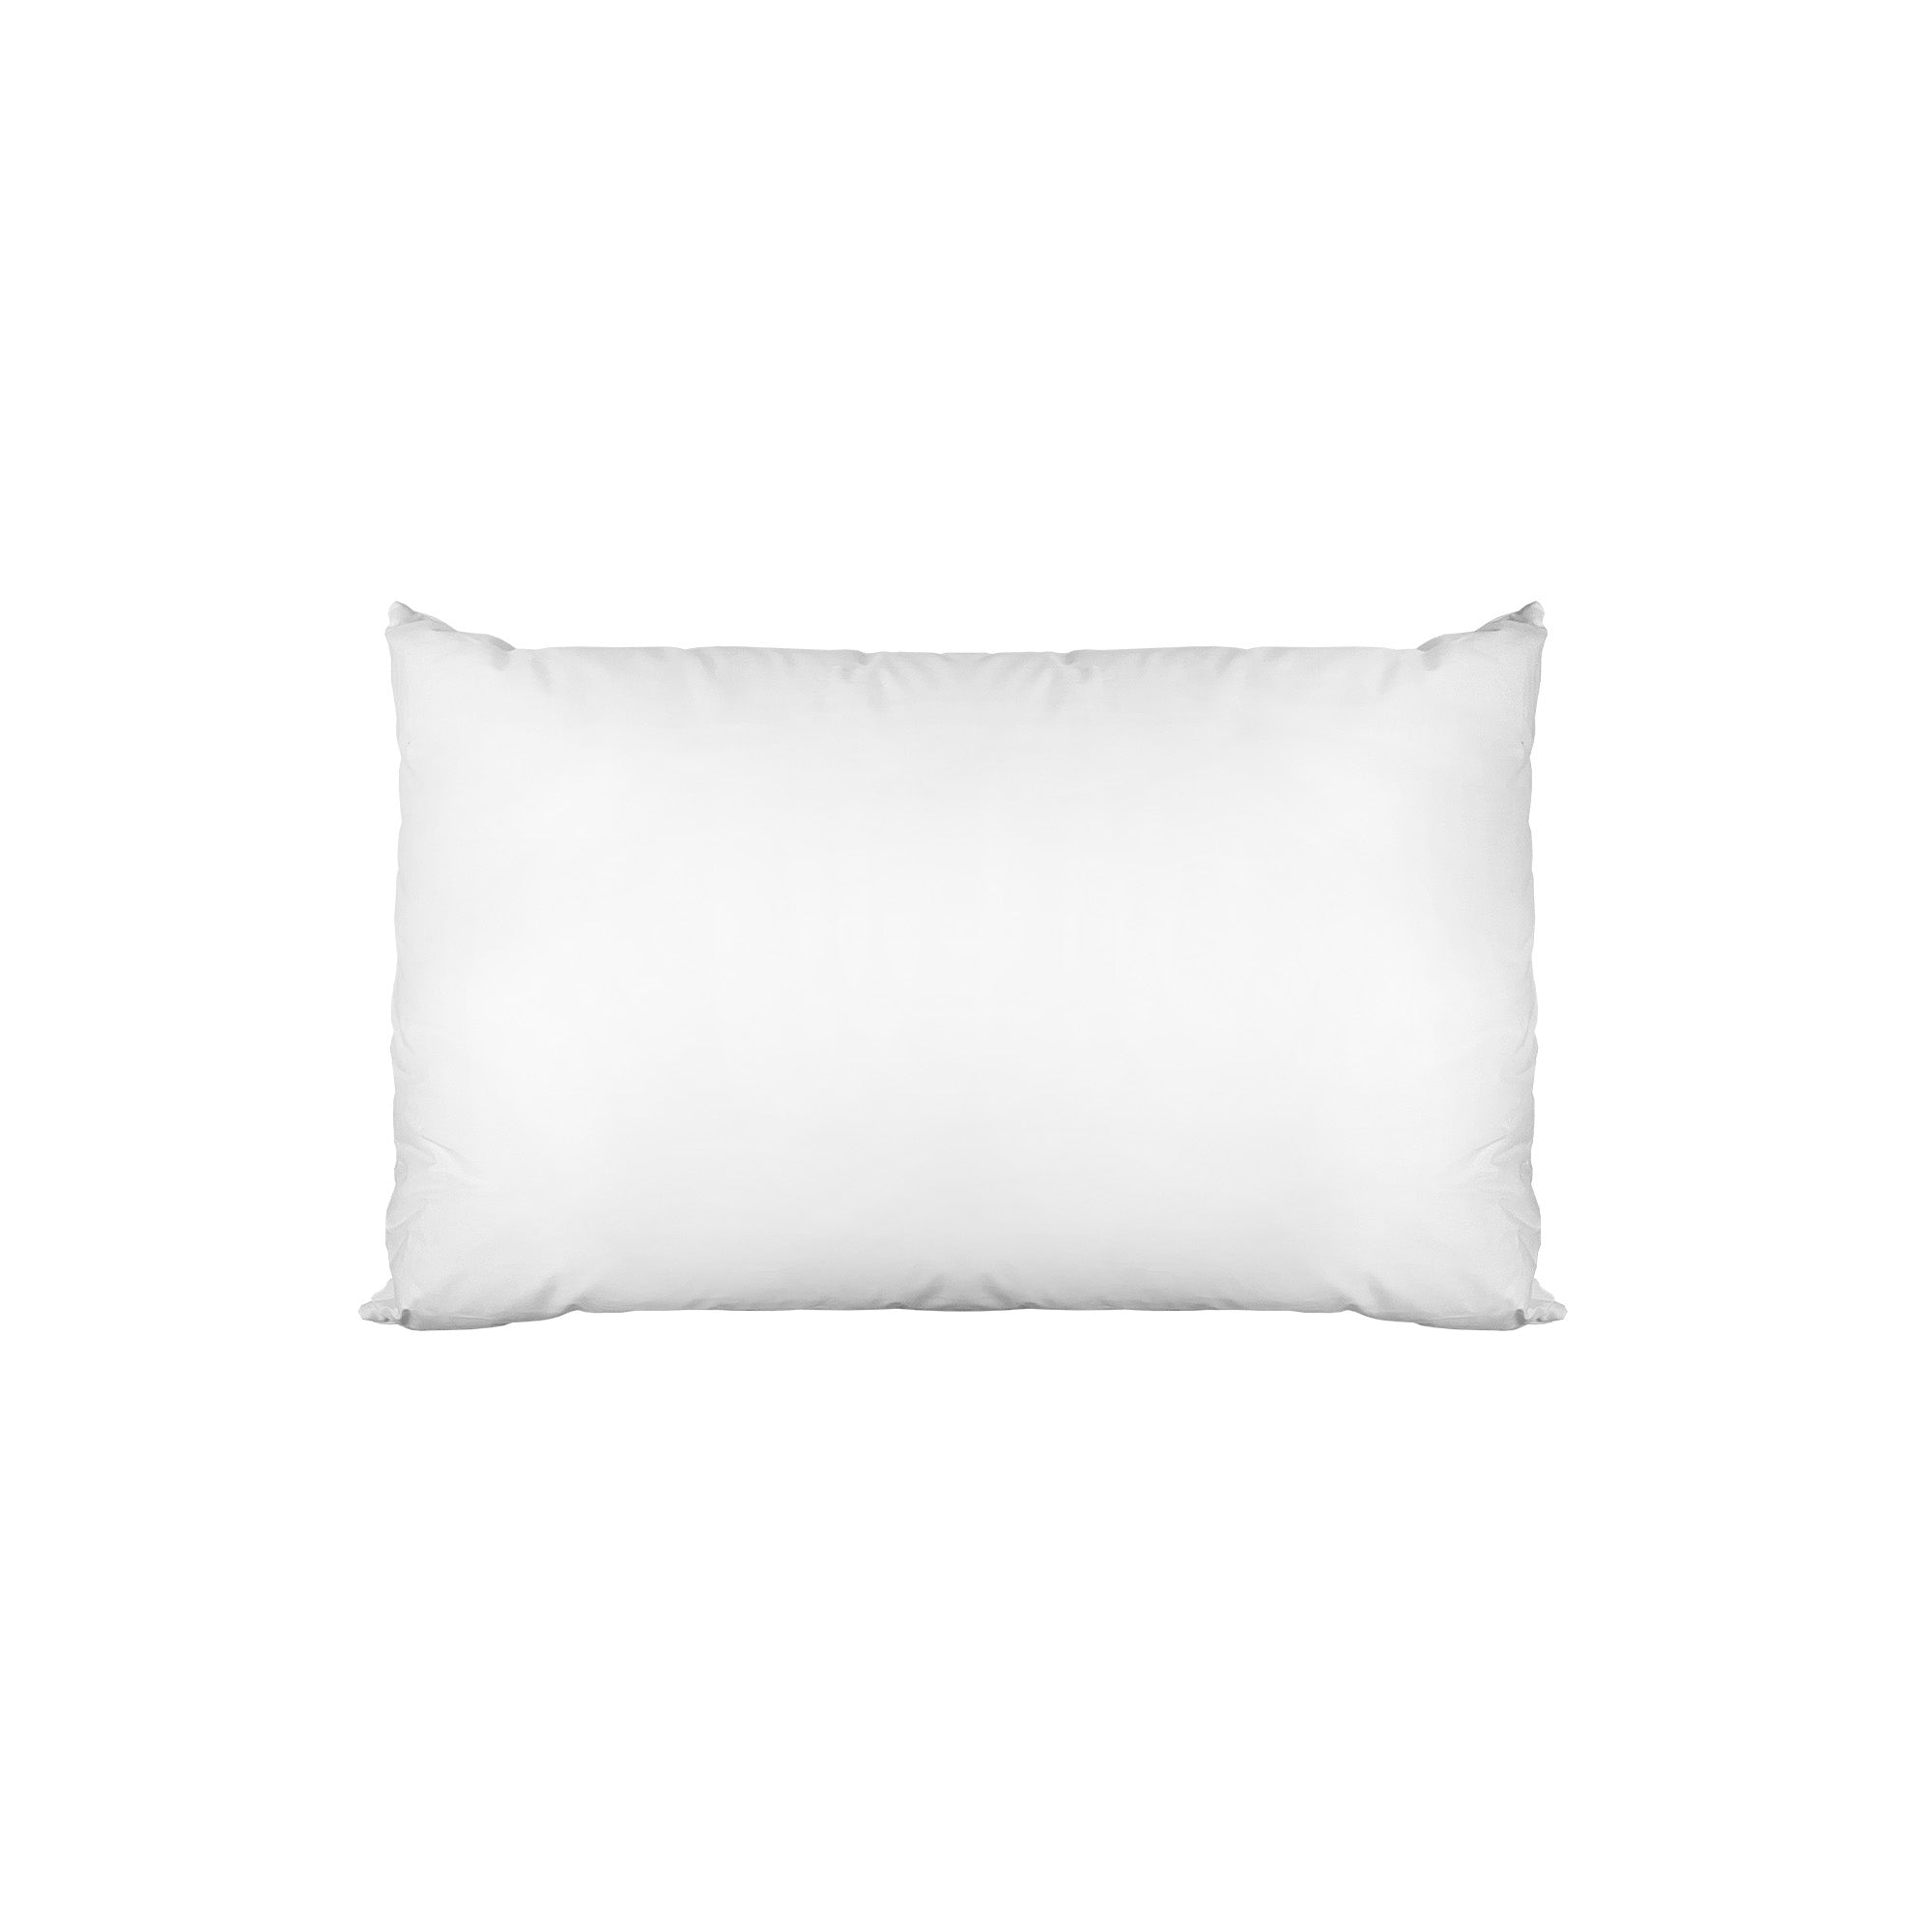 Sealy Hybrid Memory Foam Pillow